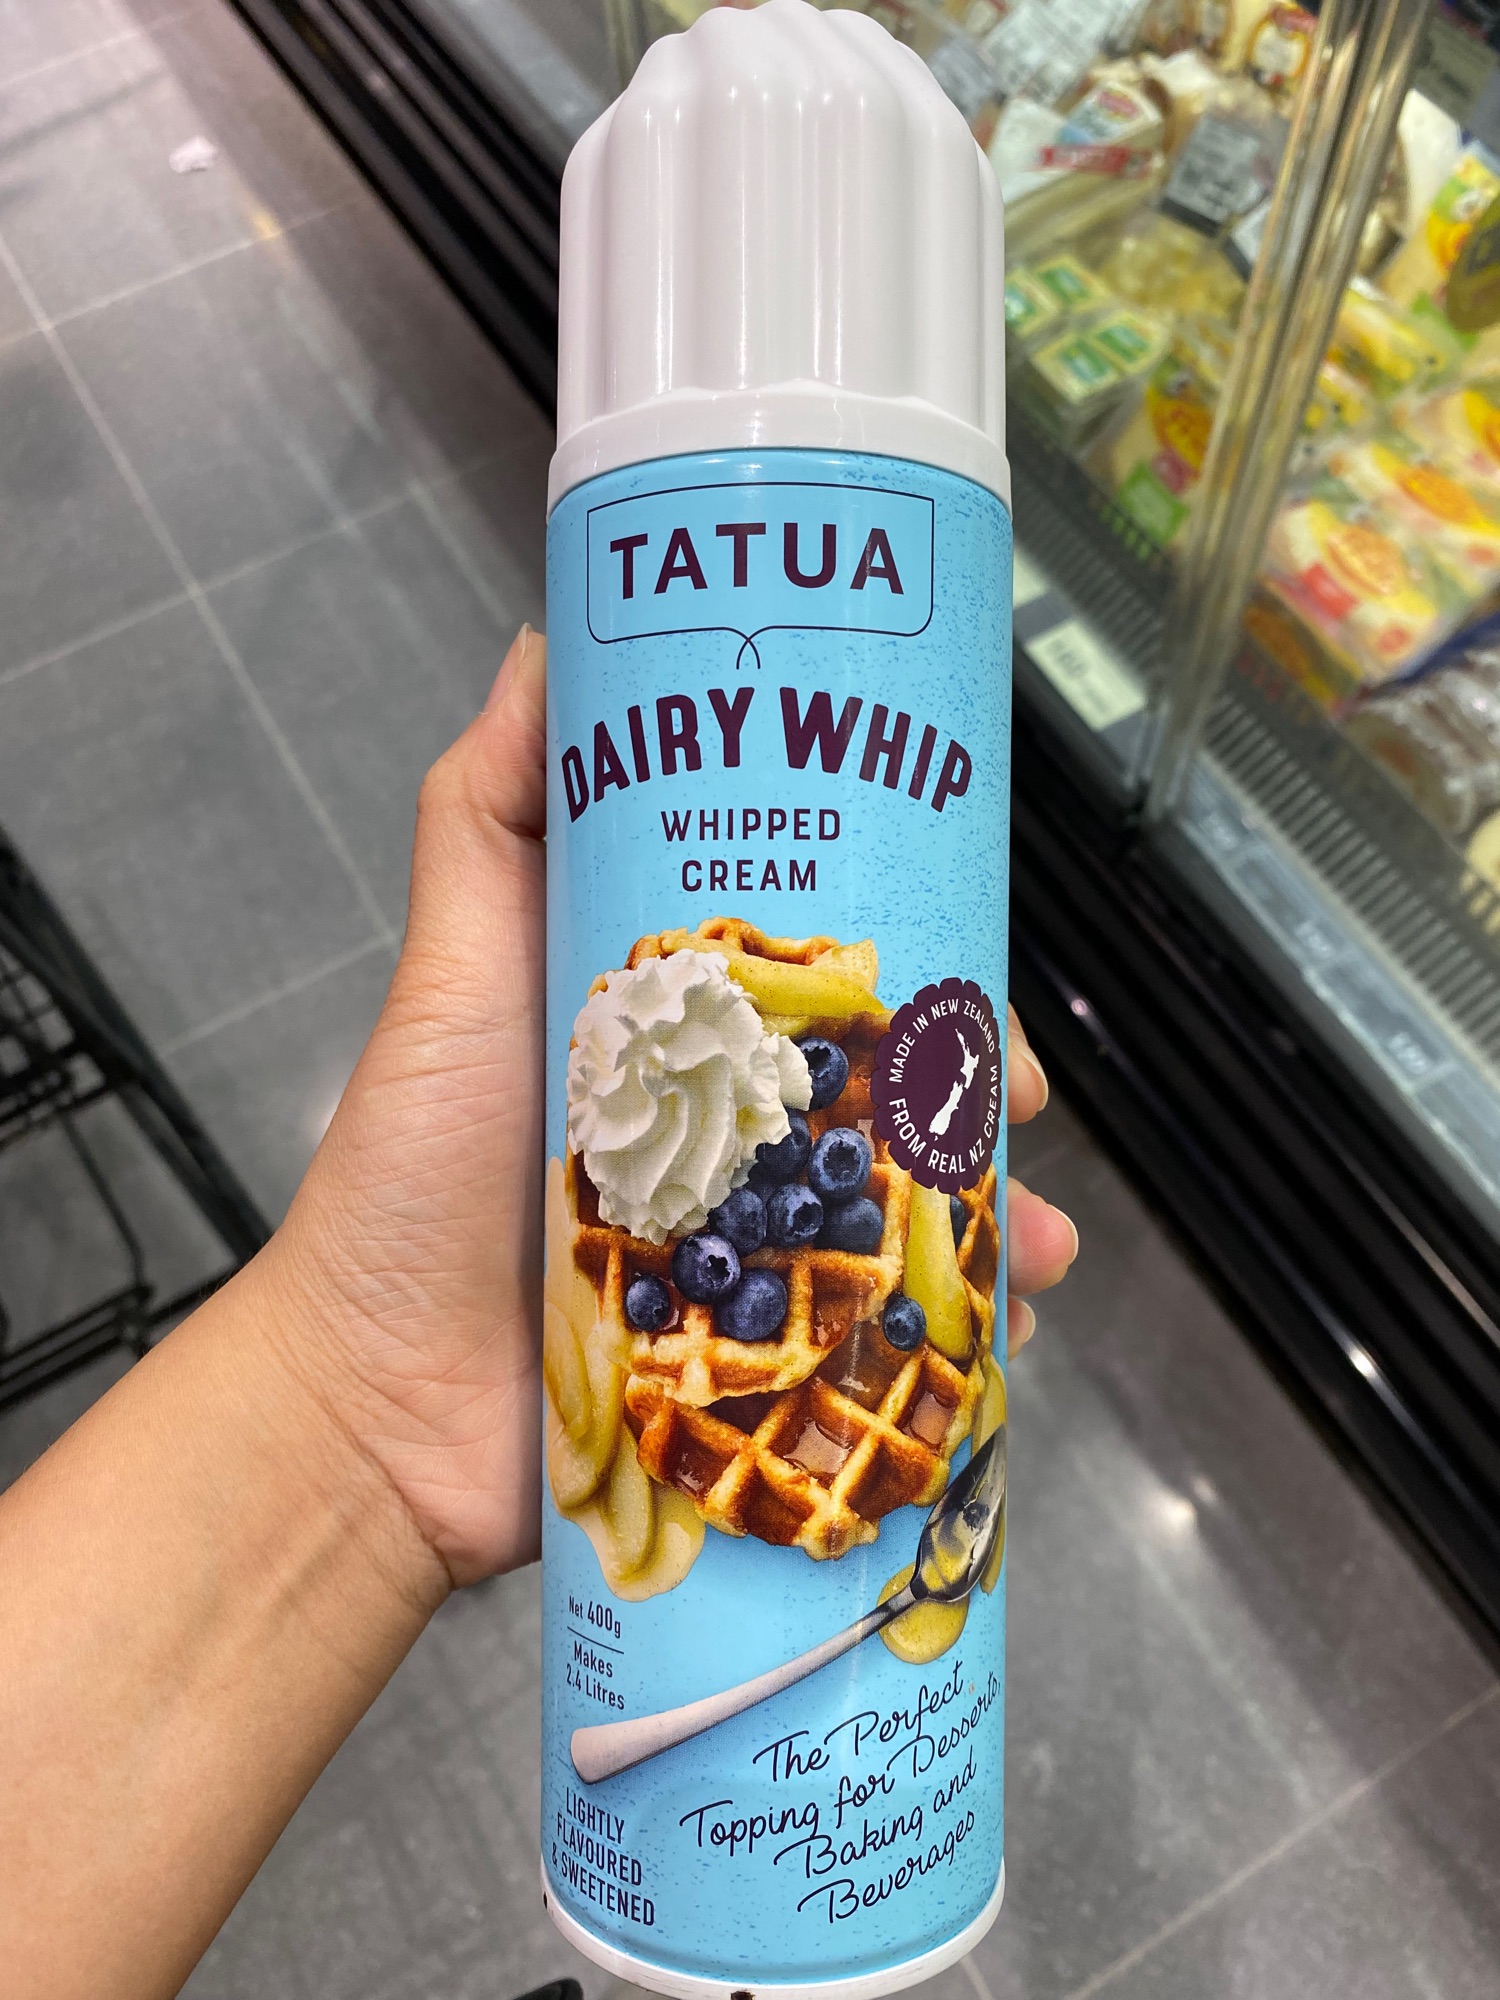 Tatua Dairy Whip Whipped Cream 400g ตาตัวแดรี่วิป จากนิวซีแลนด์และ400กรัม